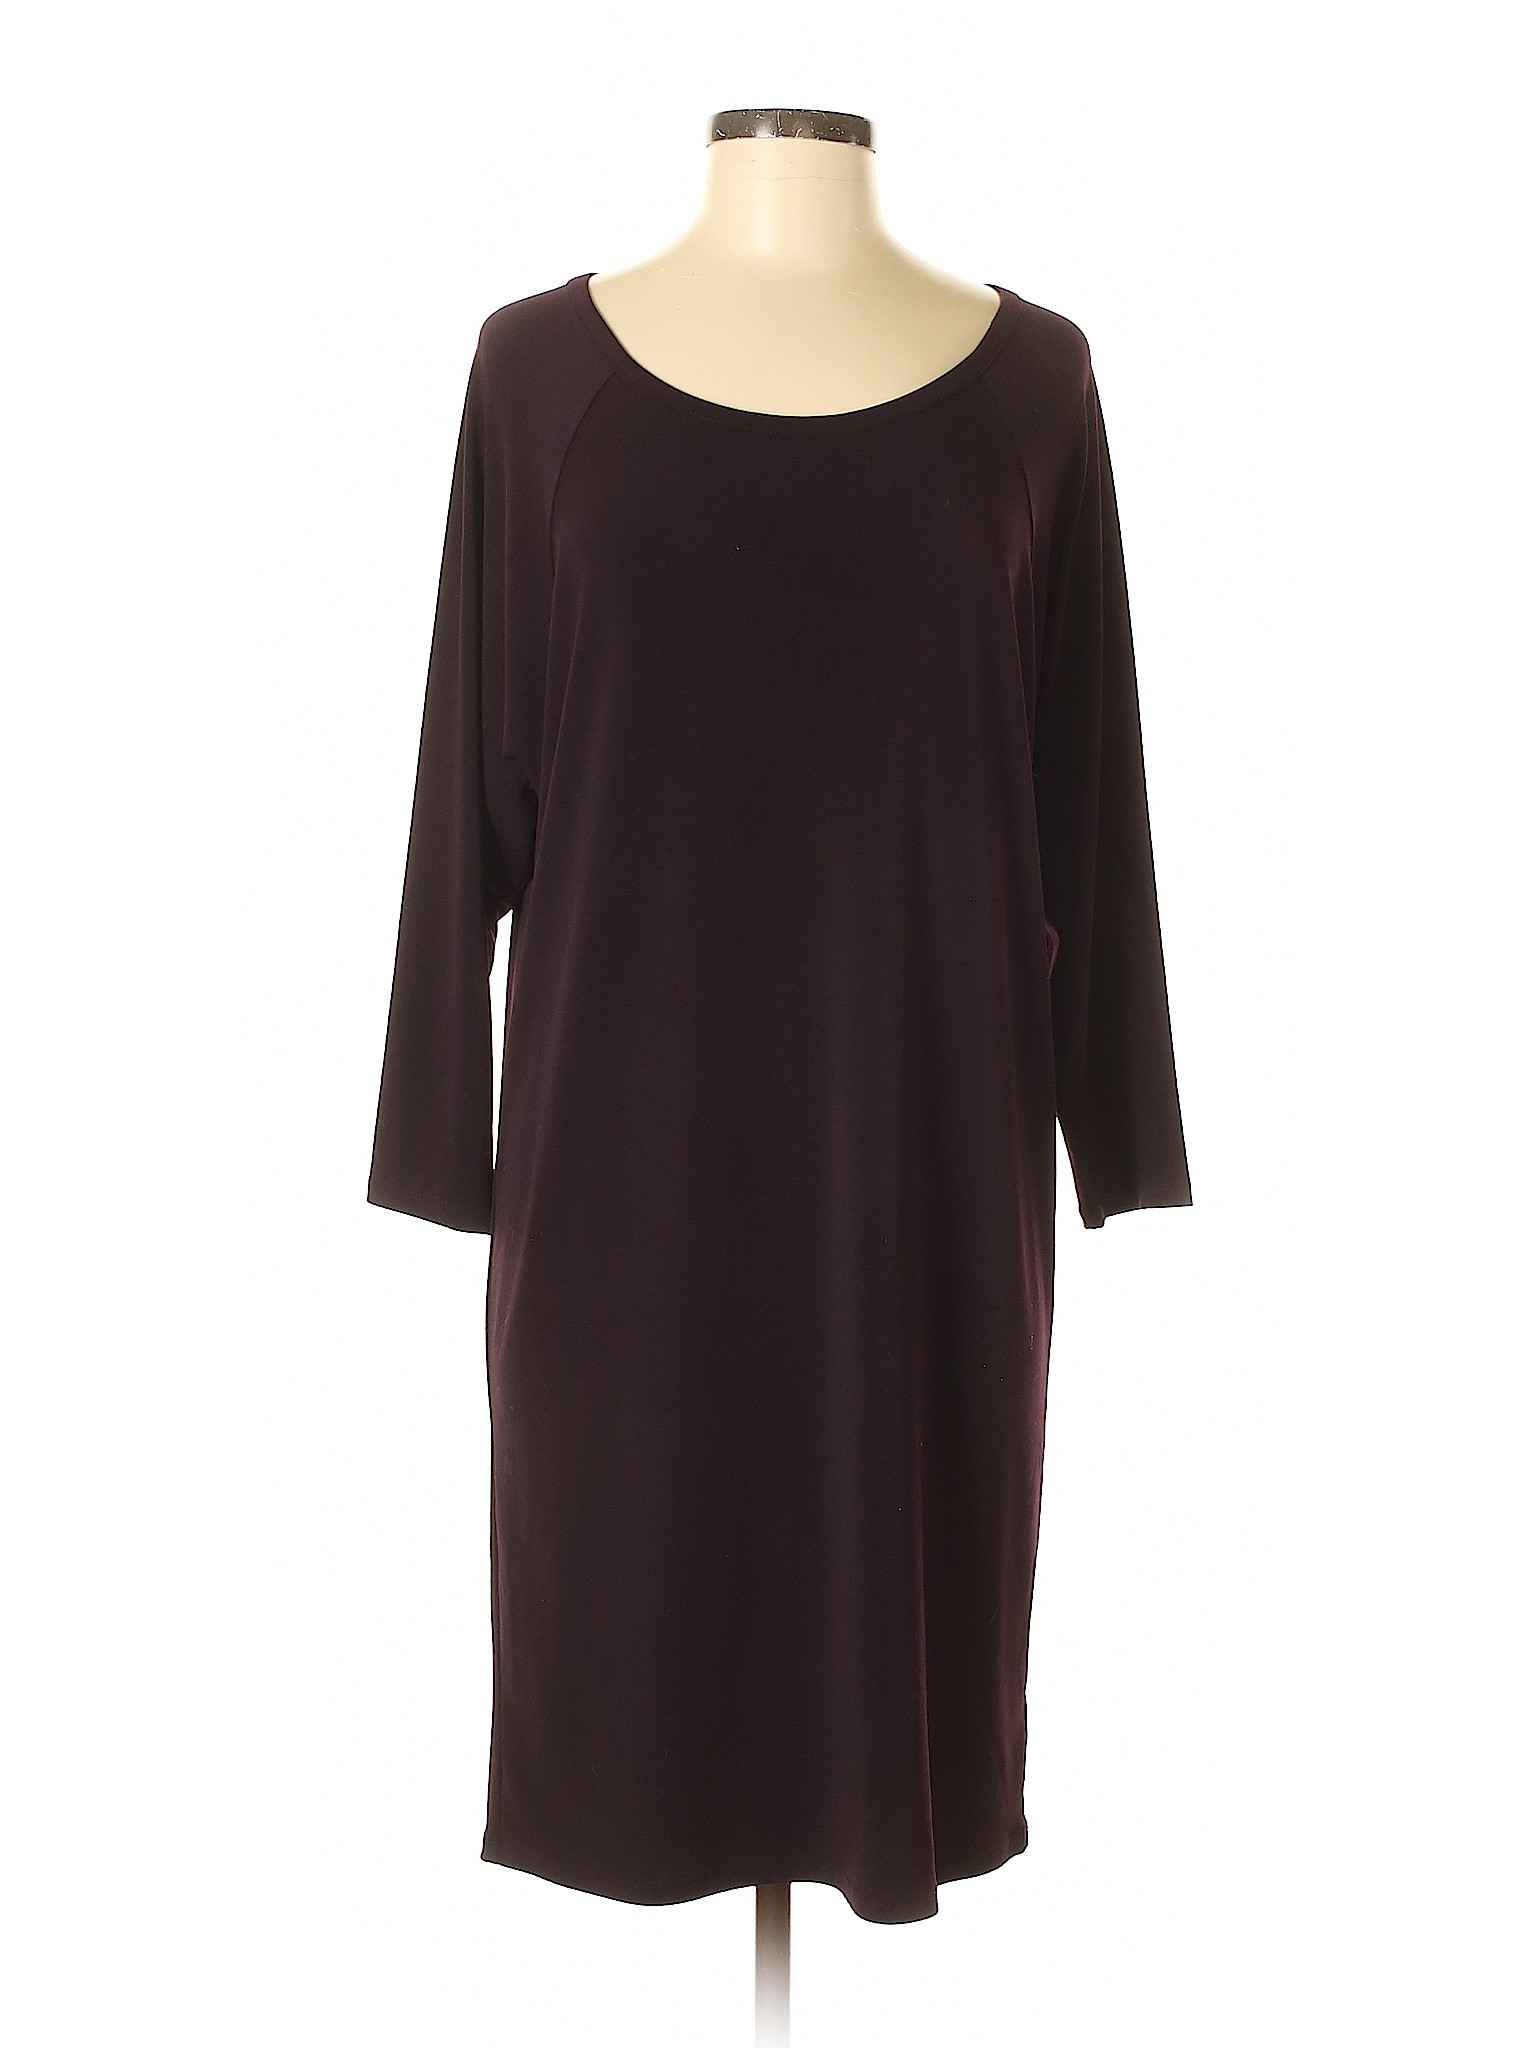 Michael Michael Kors Women Brown Casual Dress Med | eBay